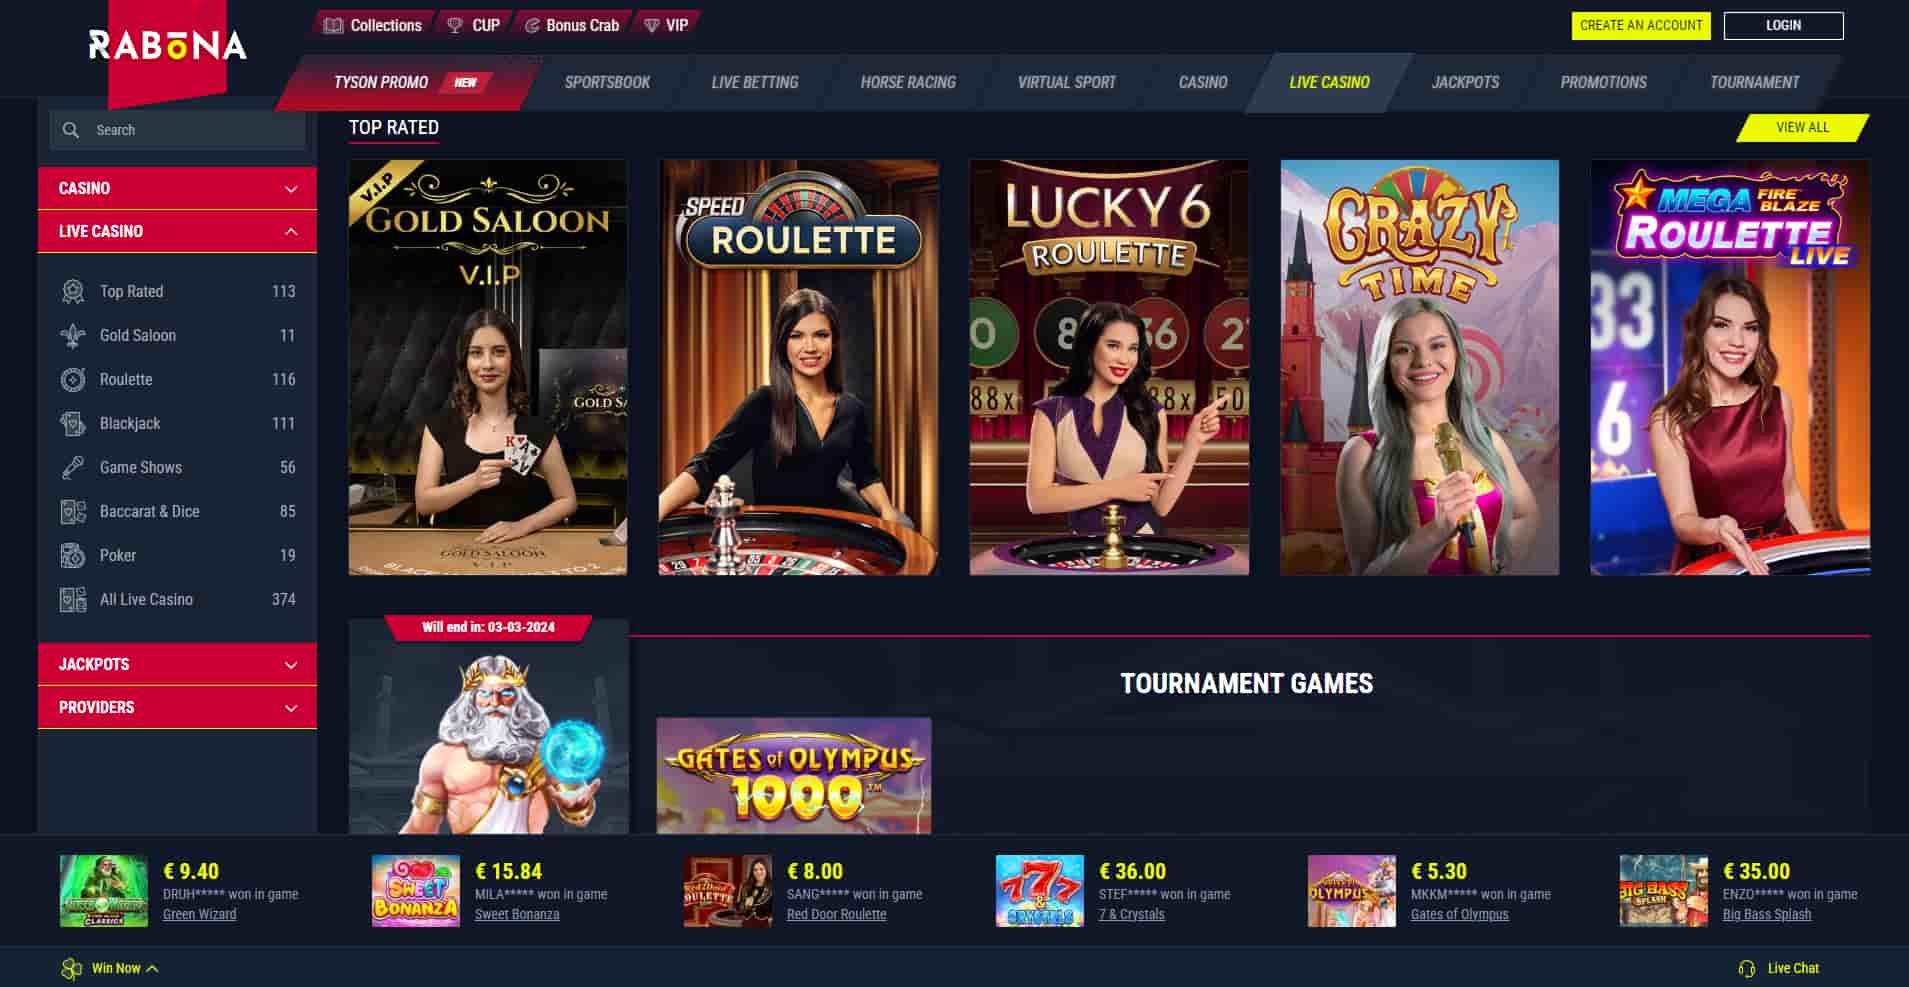 Rabona casino games selection